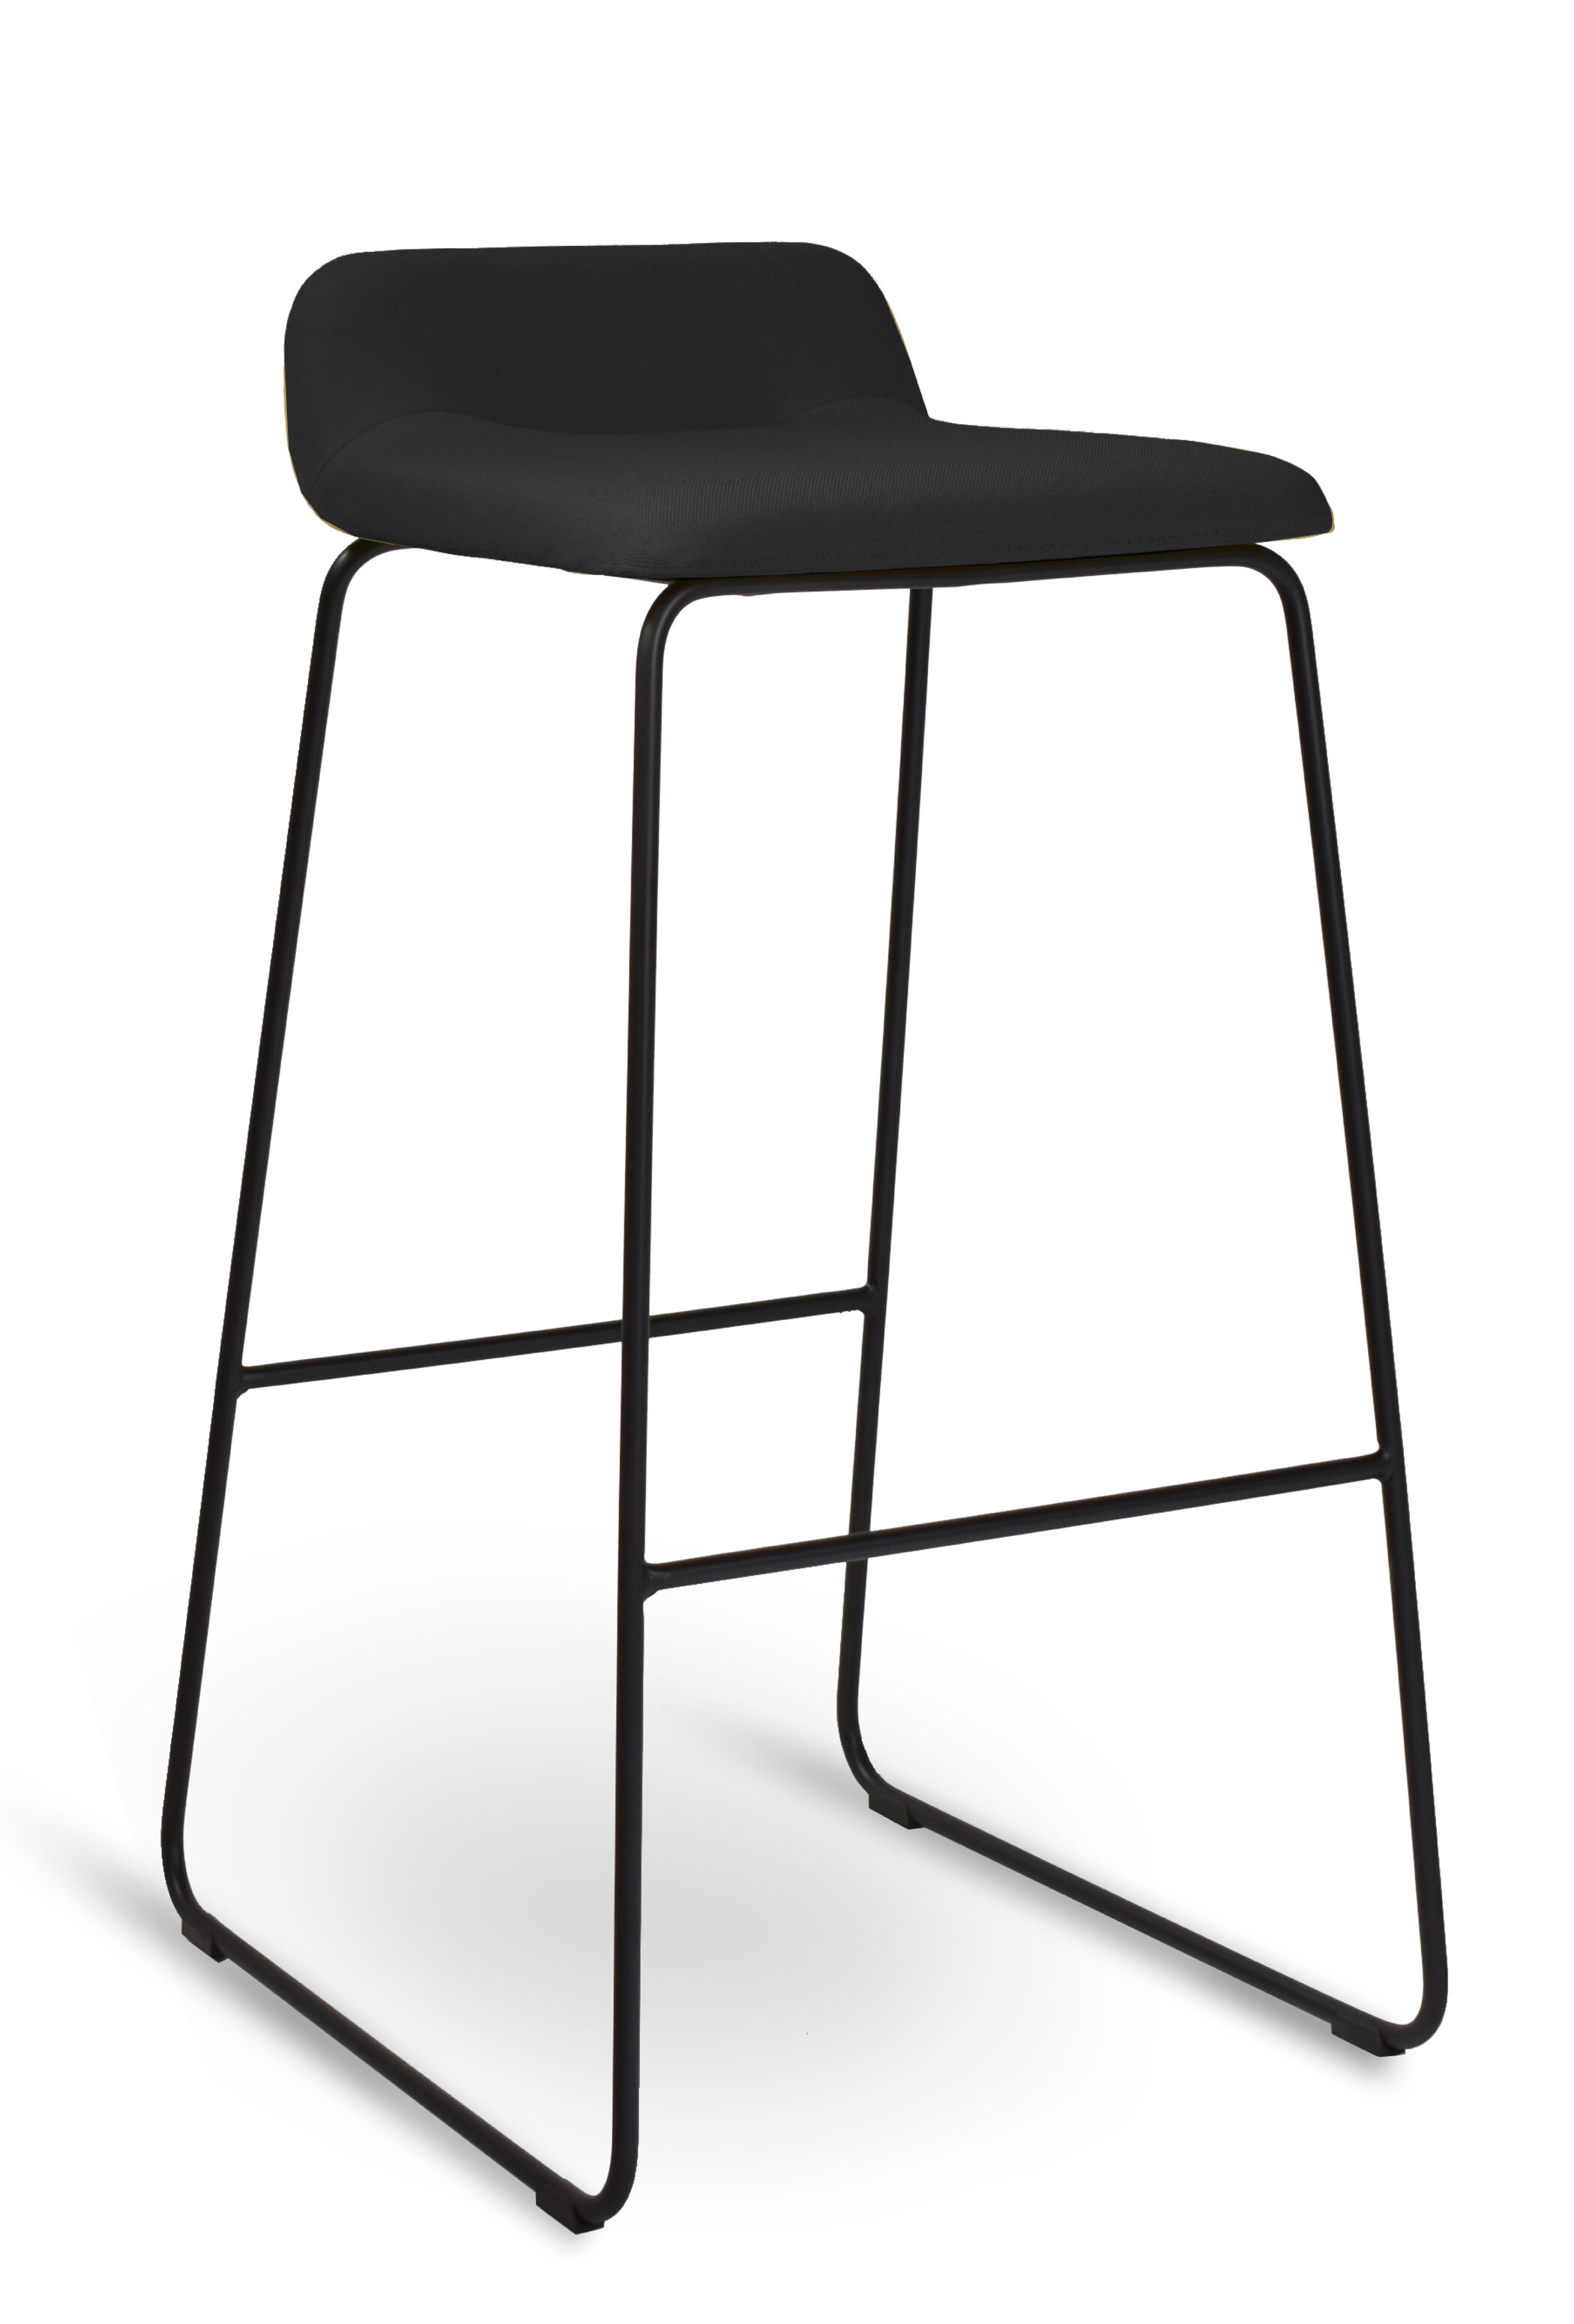 WS - Lolli high stool - ERA CSE14 FORWARD